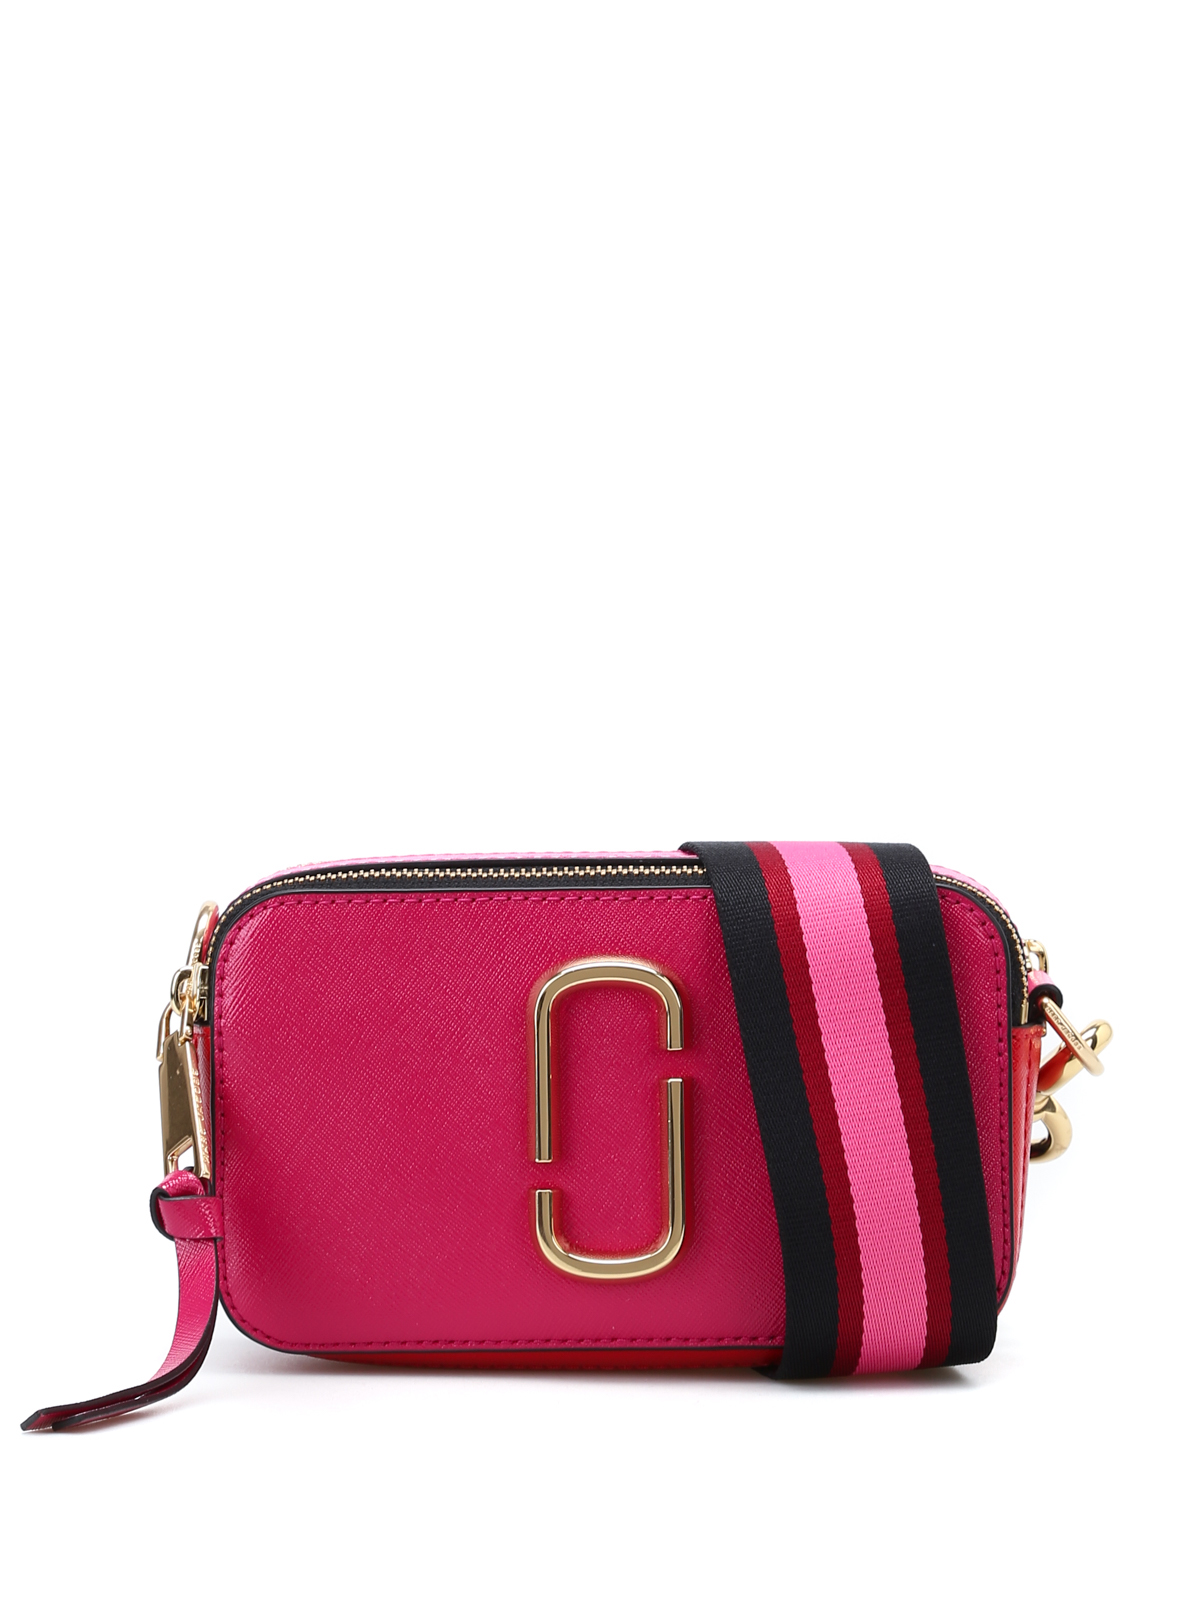 Marc Jacobs Snapshot Camera Bag in Pink